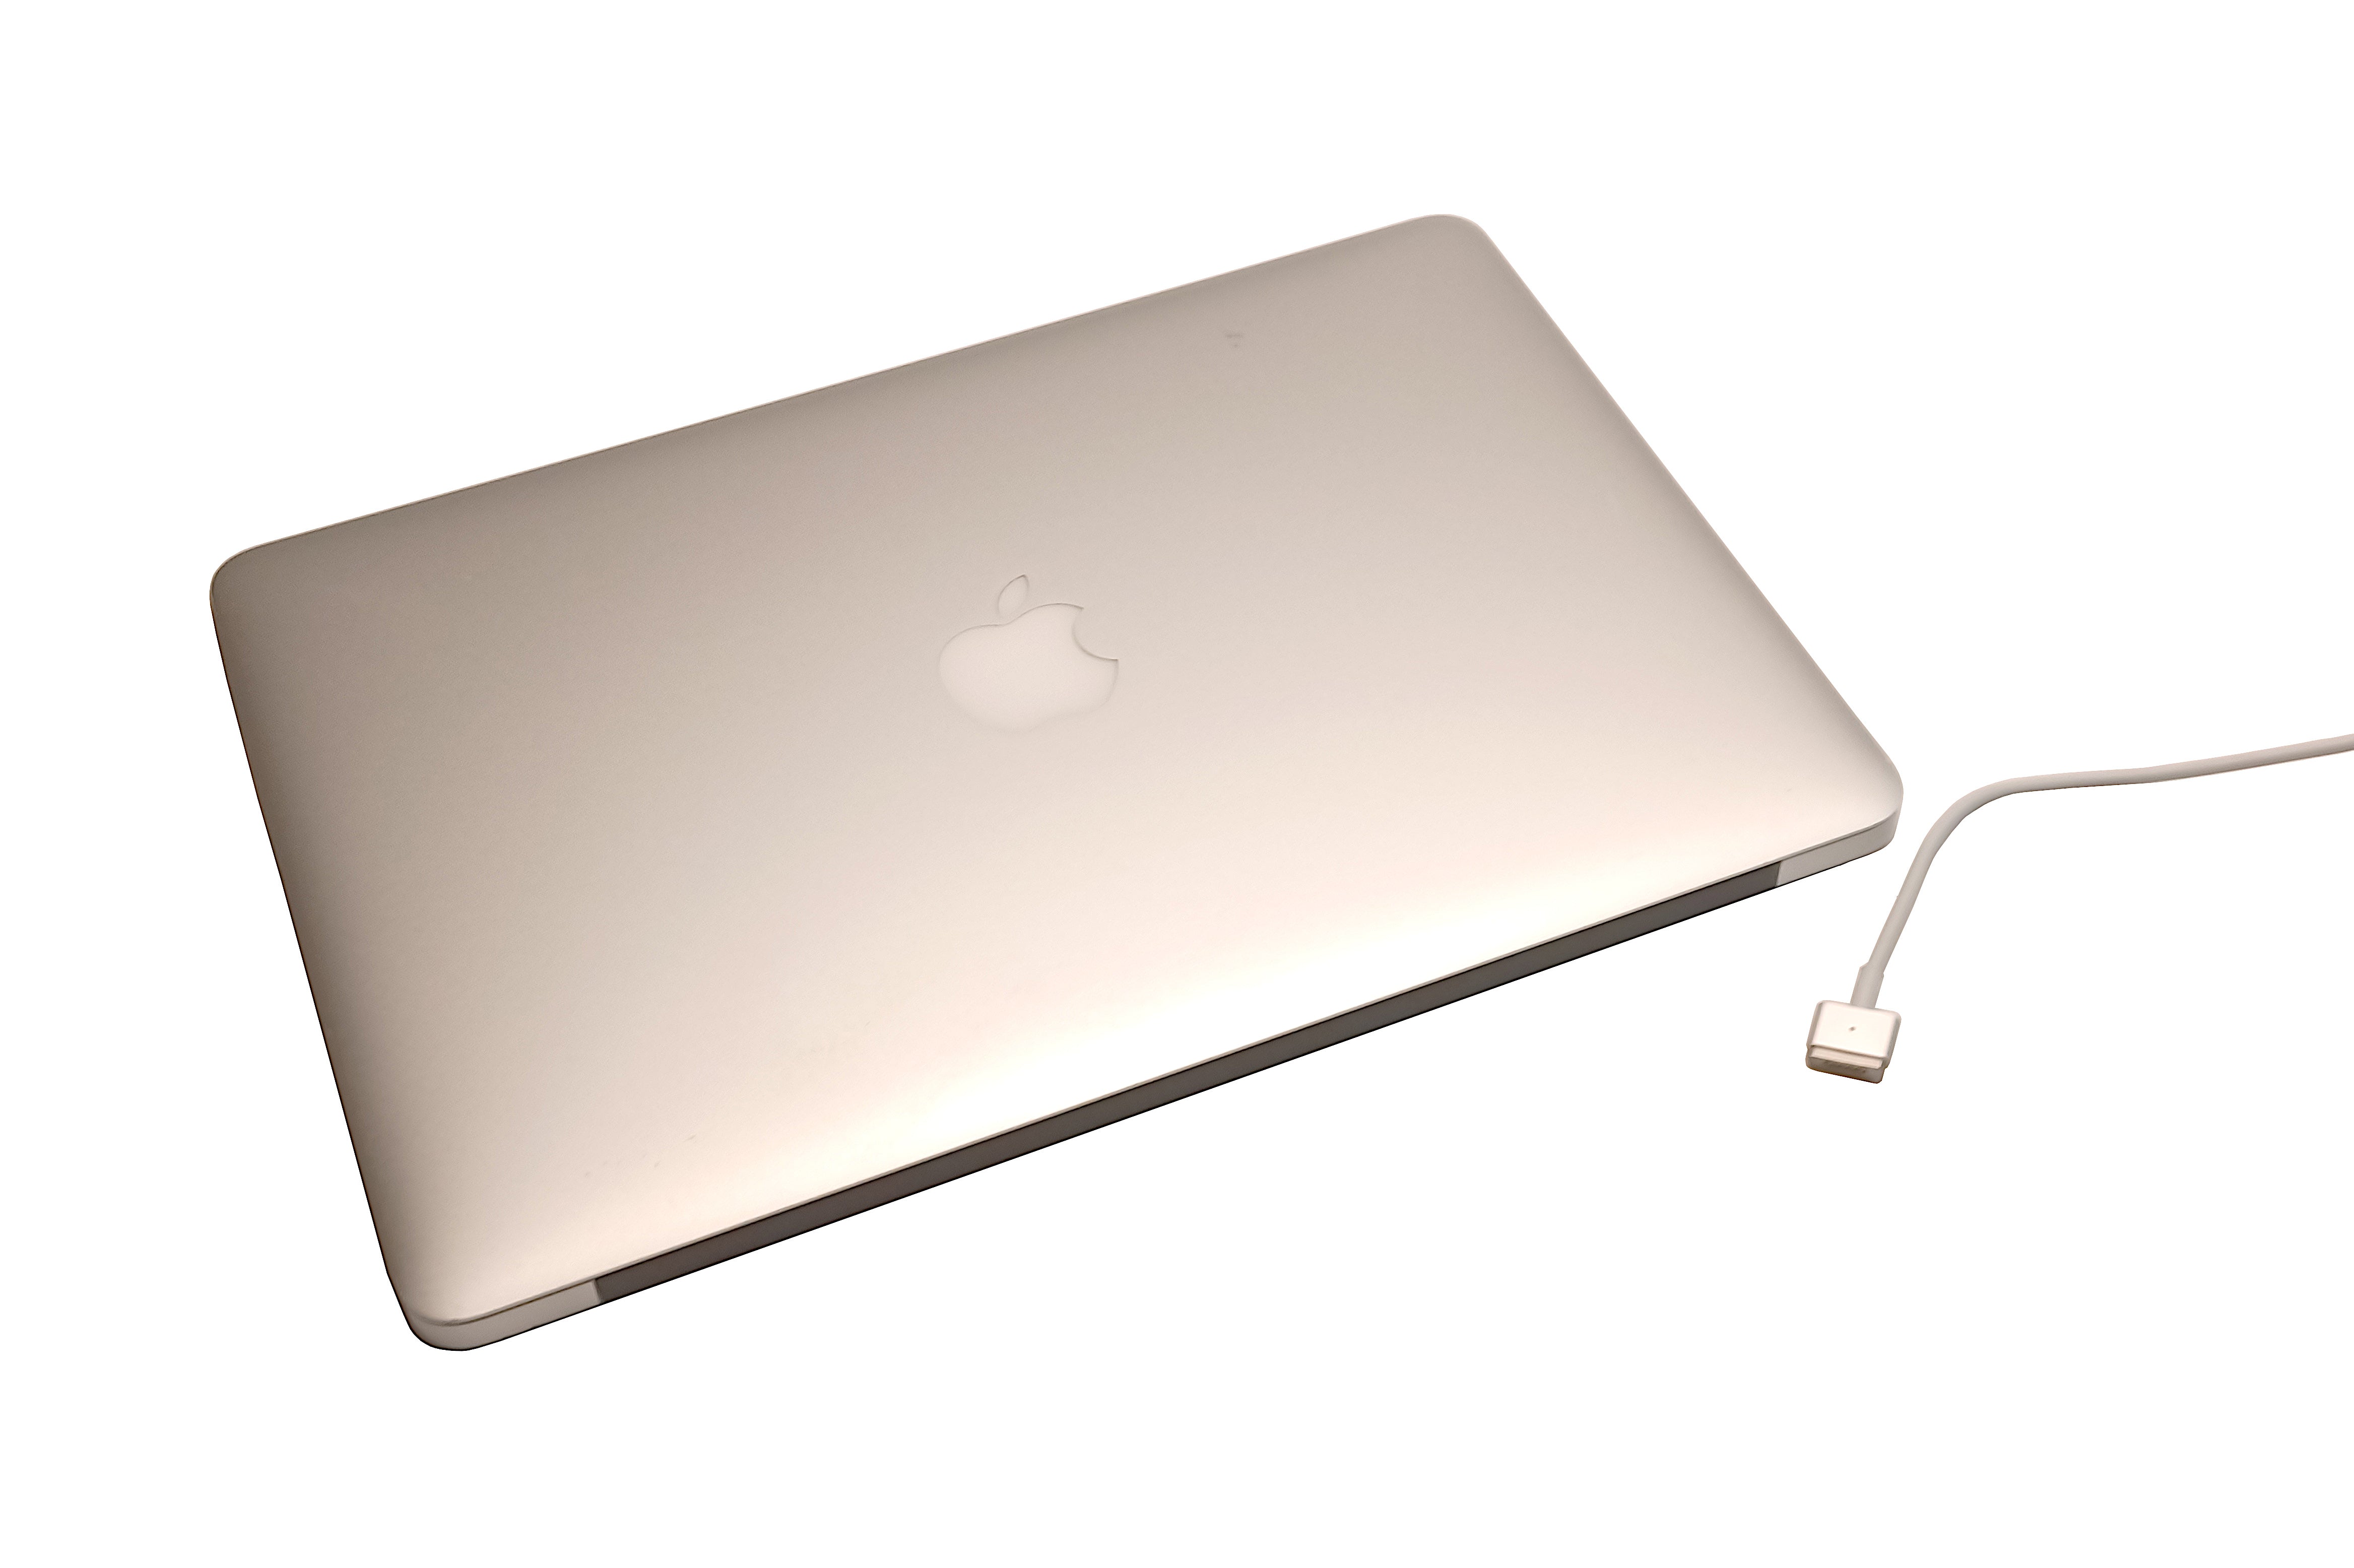 Apple MacBook Air 2015 Laptop, 13" Core i5 5th Gen, 8GB RAM, 128GB SSD, Monterey